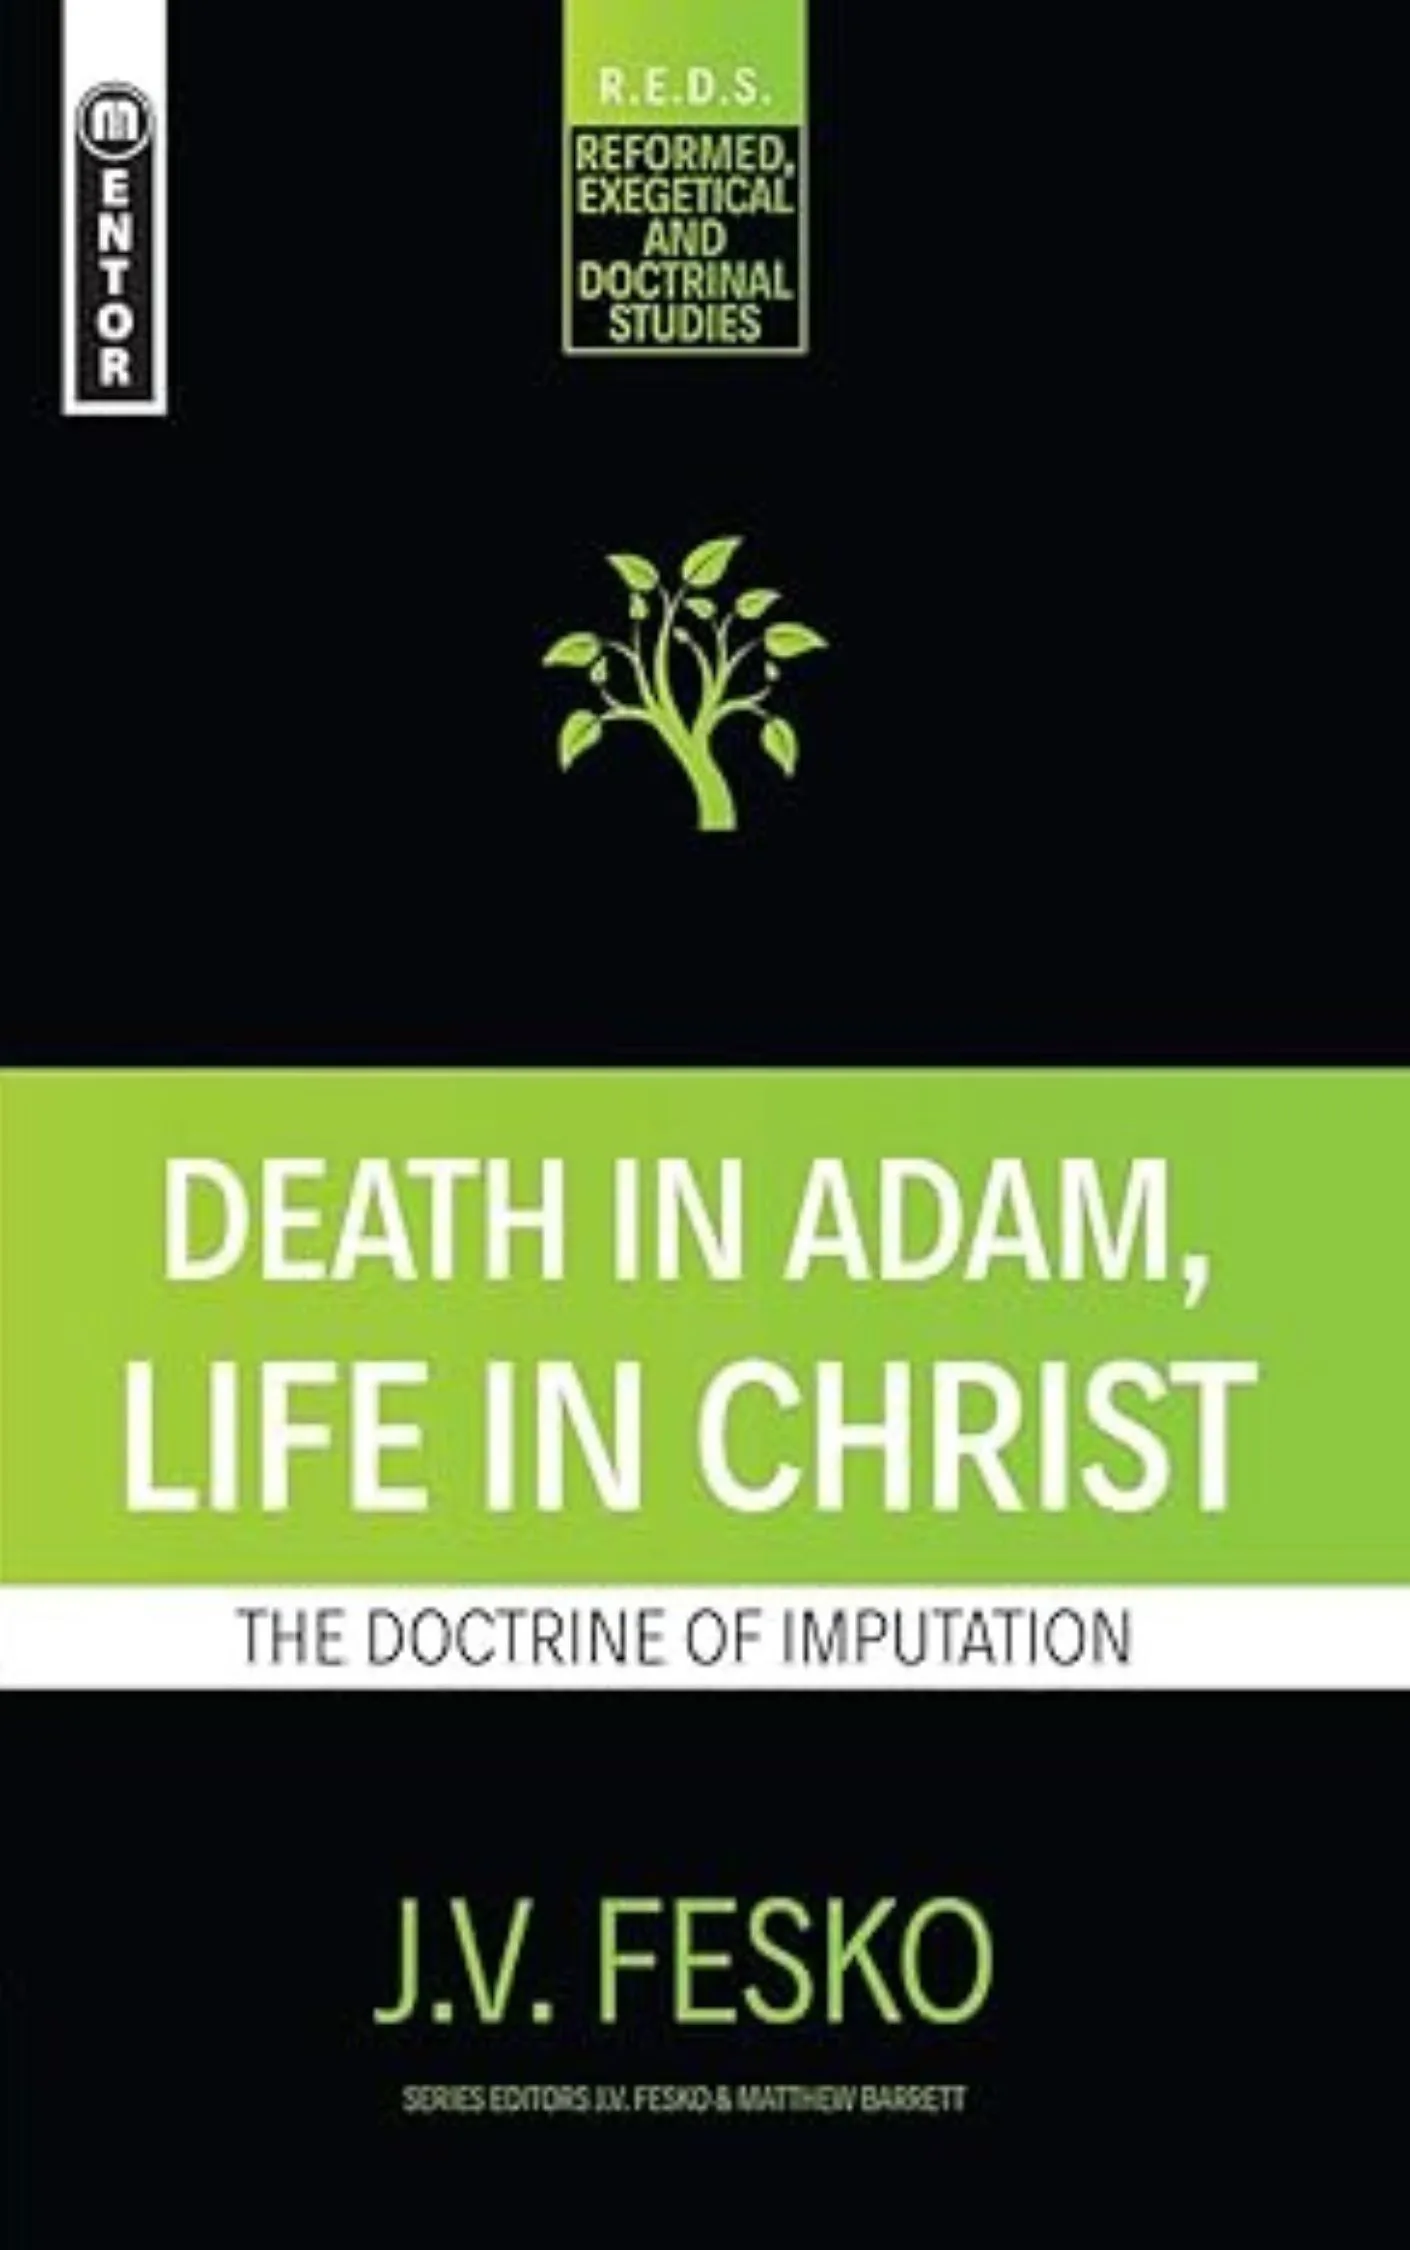 Death in Adam, Life in Christ: The Doctrine of Imputation by J. V. Fesko